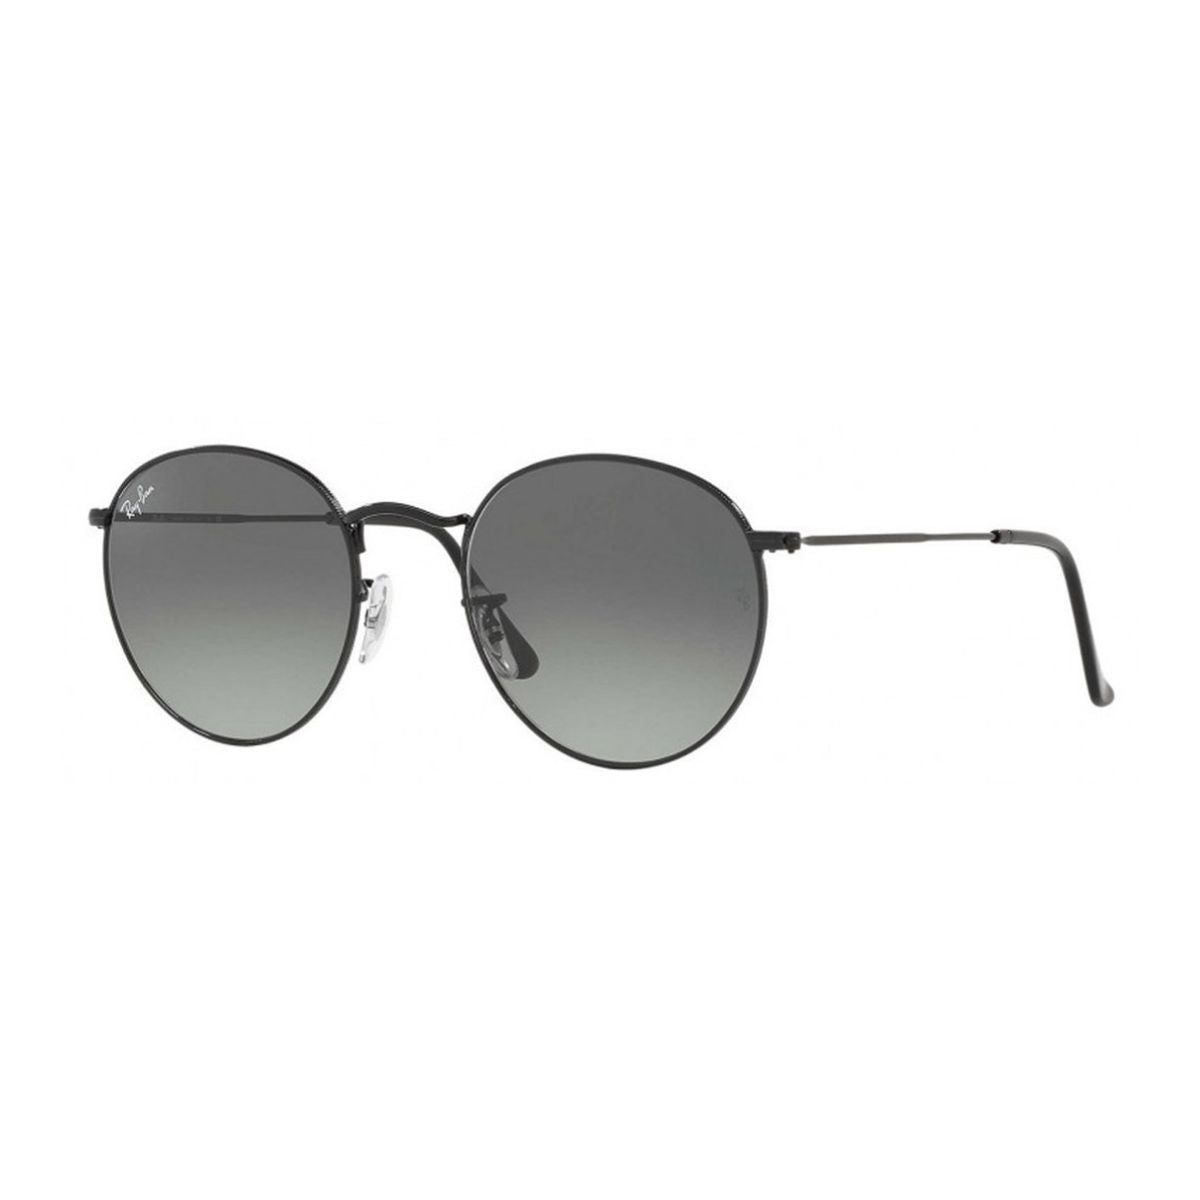 "Rayban 3447 002/71 Round Sunglasses For Men And Women At Optorium"